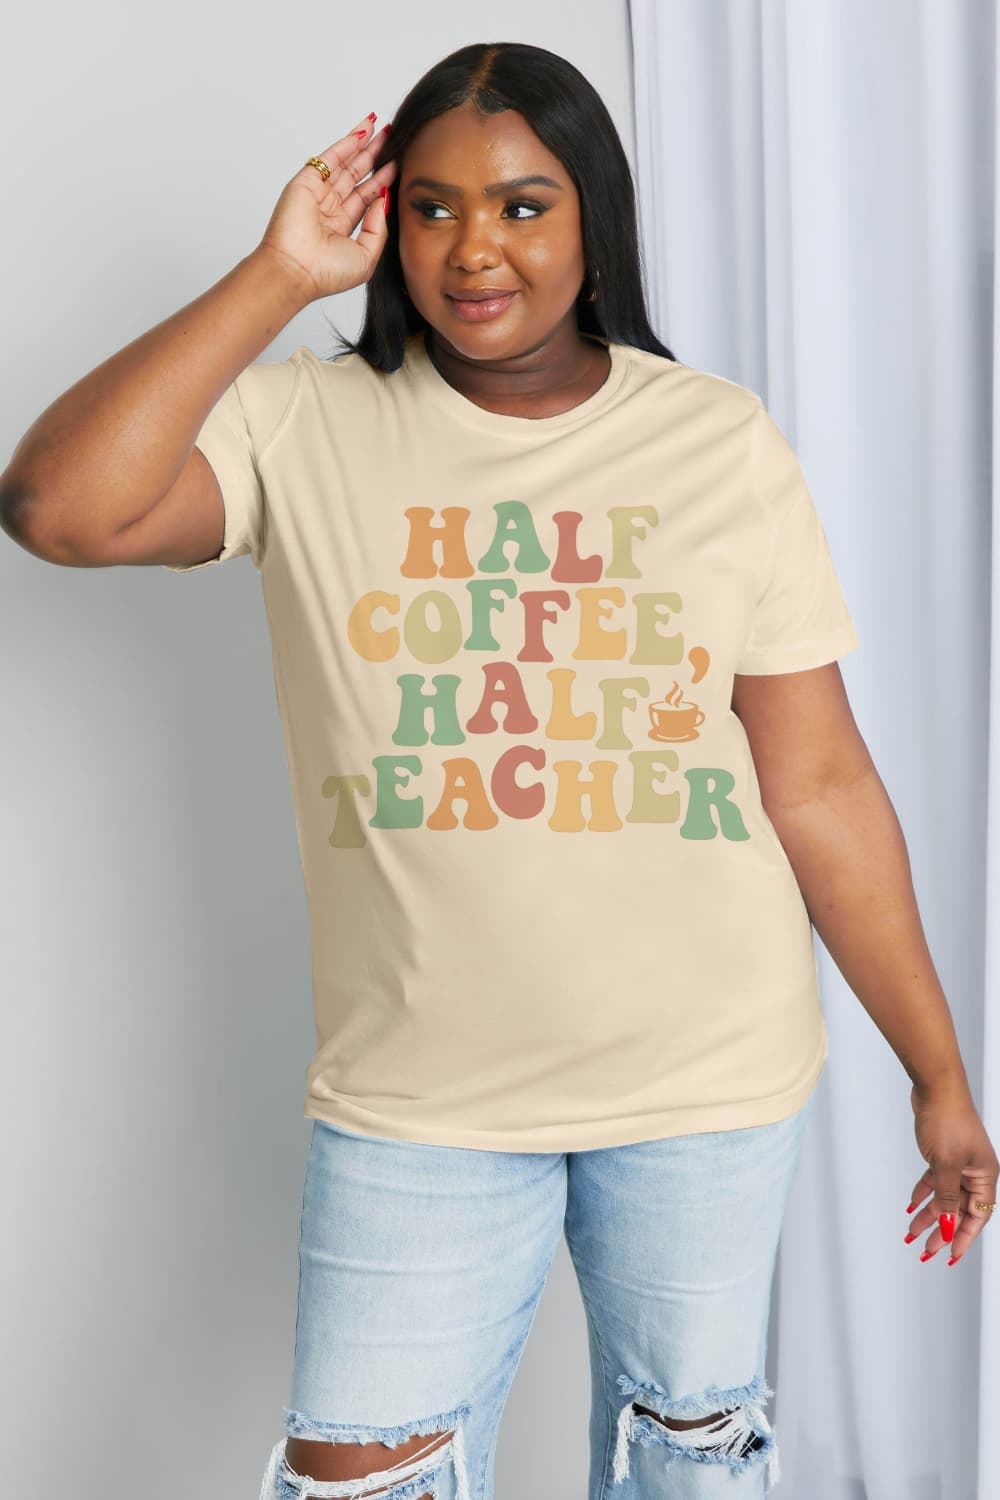 Full Size HALF COFFEE HALF TEACHER Graphic Cotton Tee